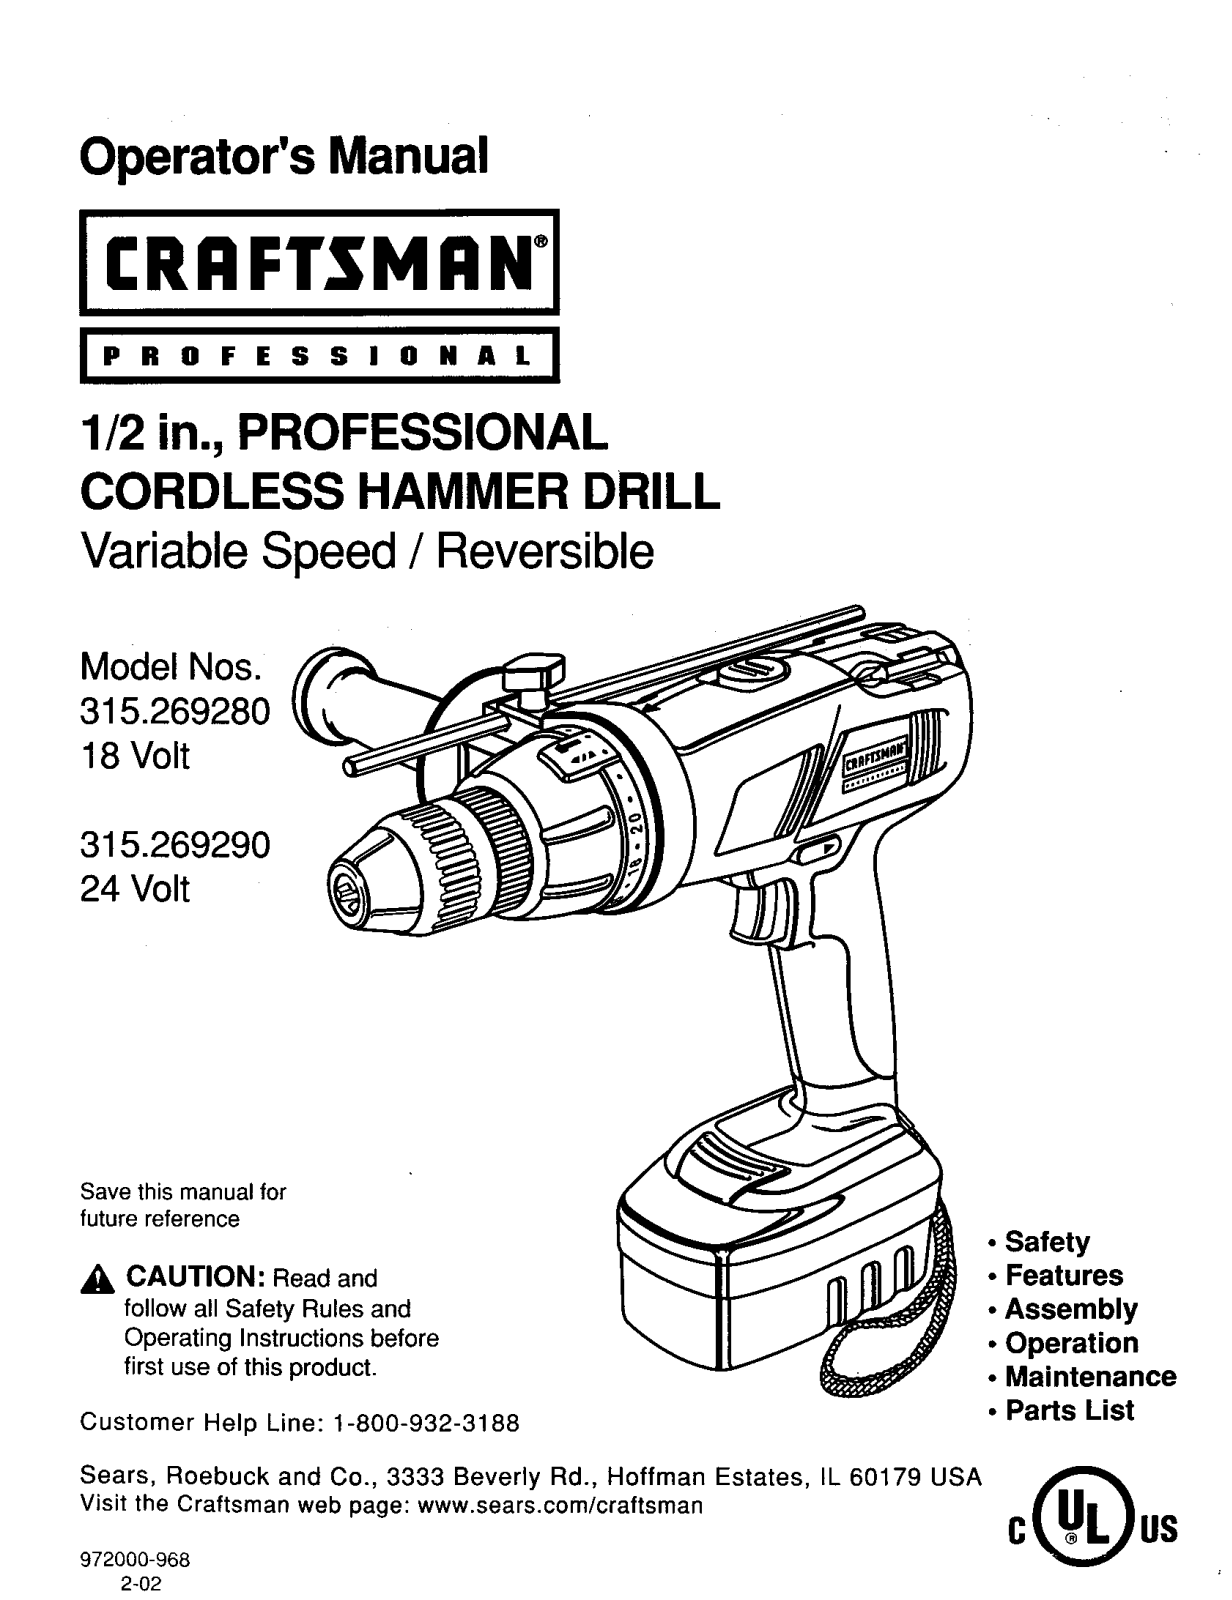 Craftsman 315269290, 315269280 Owner’s Manual